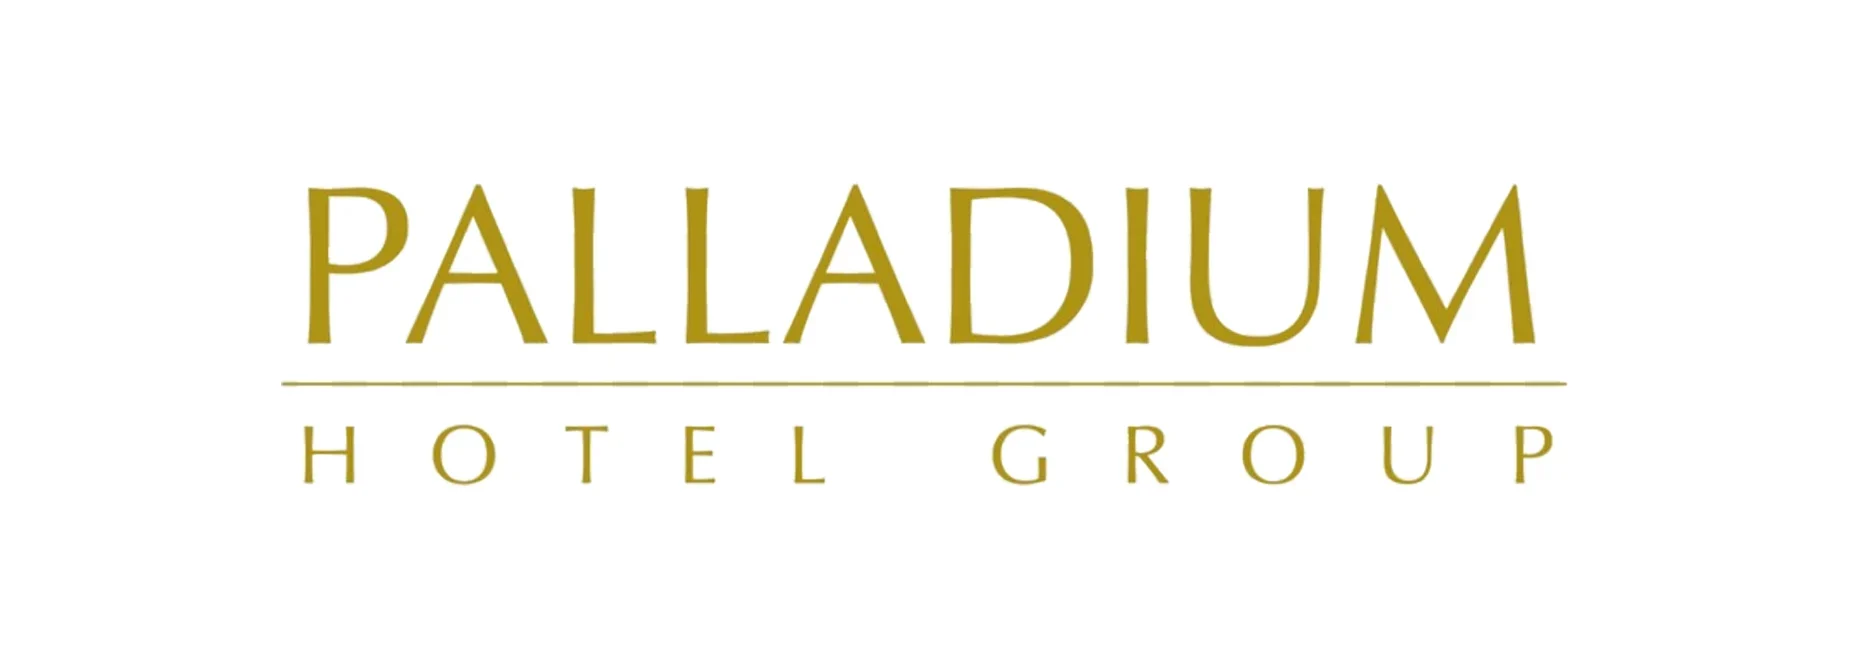 palladium hotel group-1